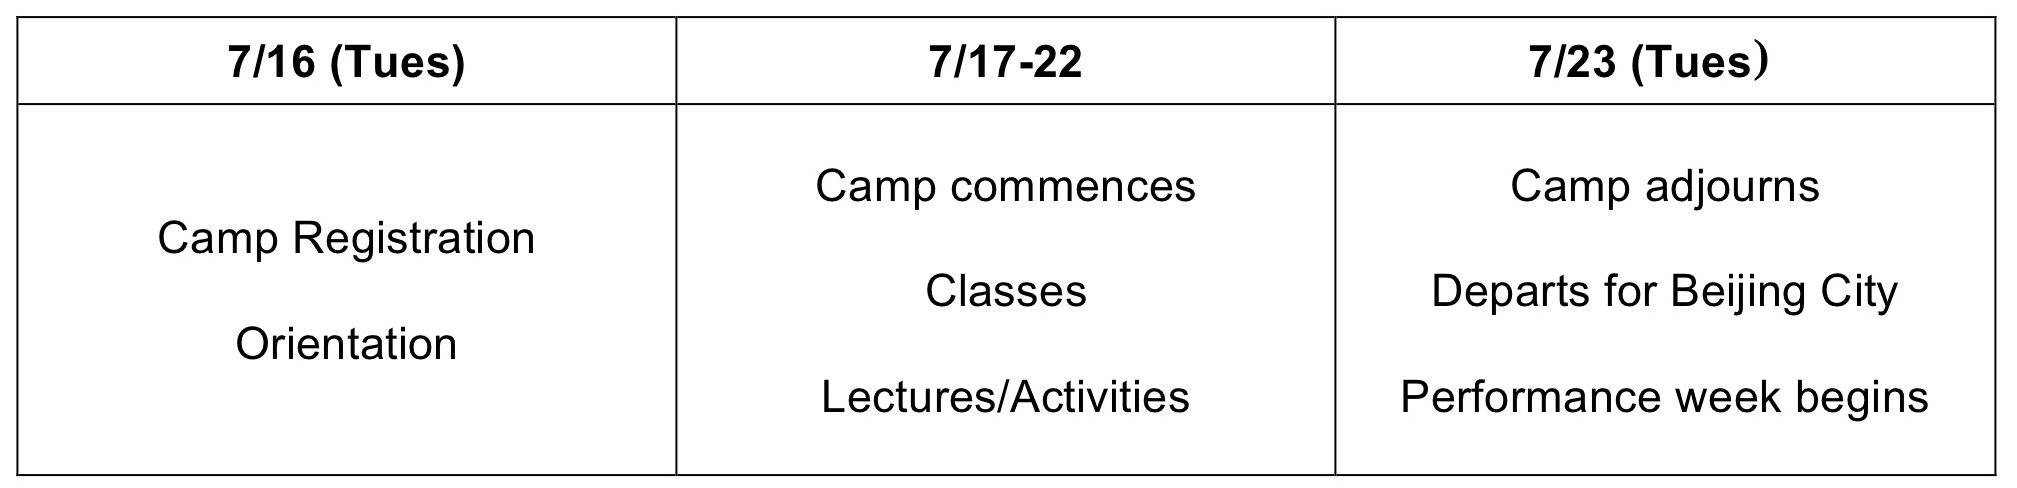 Camp-19_Enrollment招生(Eng)_2019-03-08.jpg